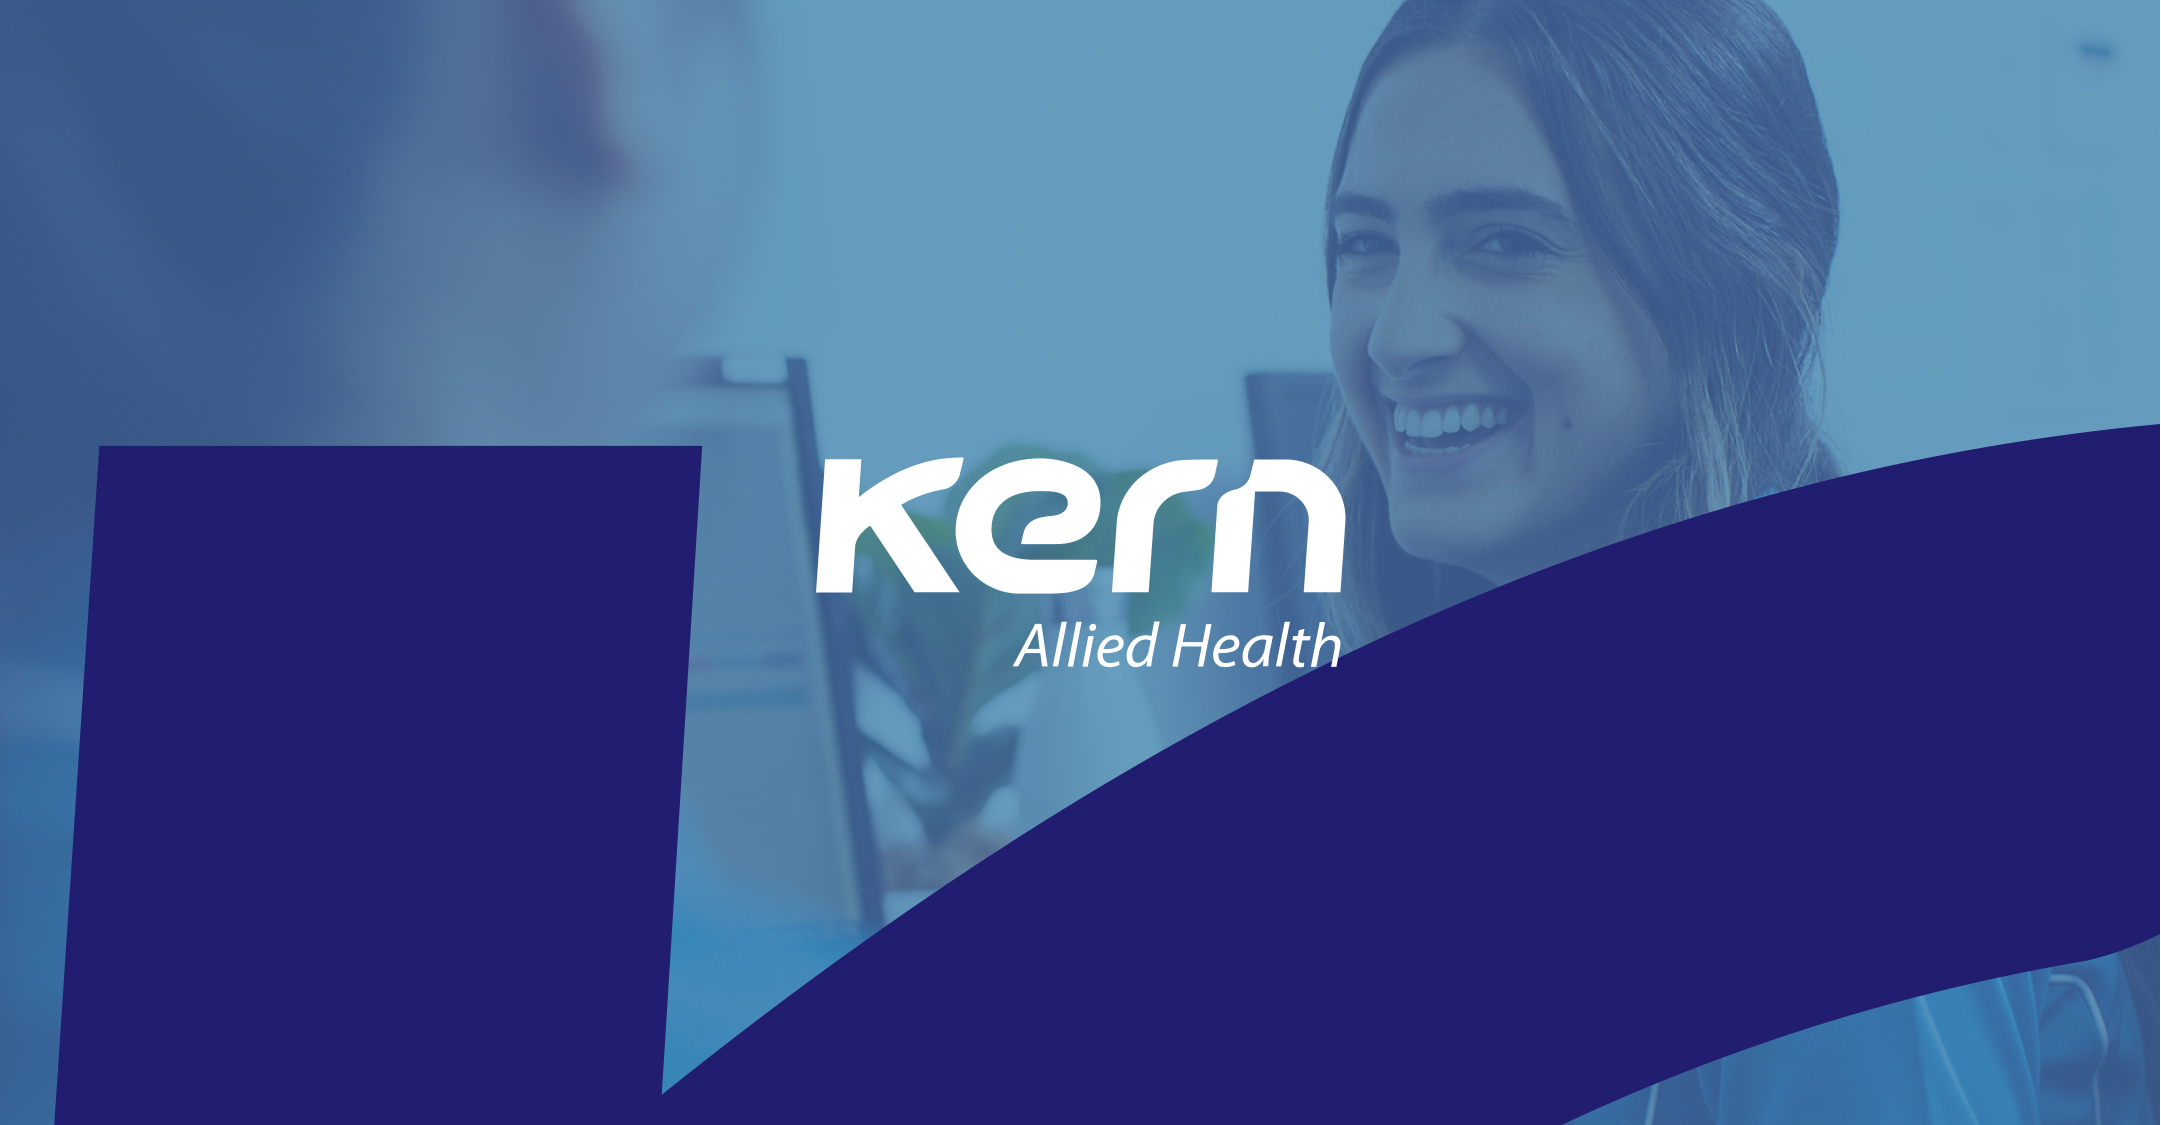 Kern Allied Health